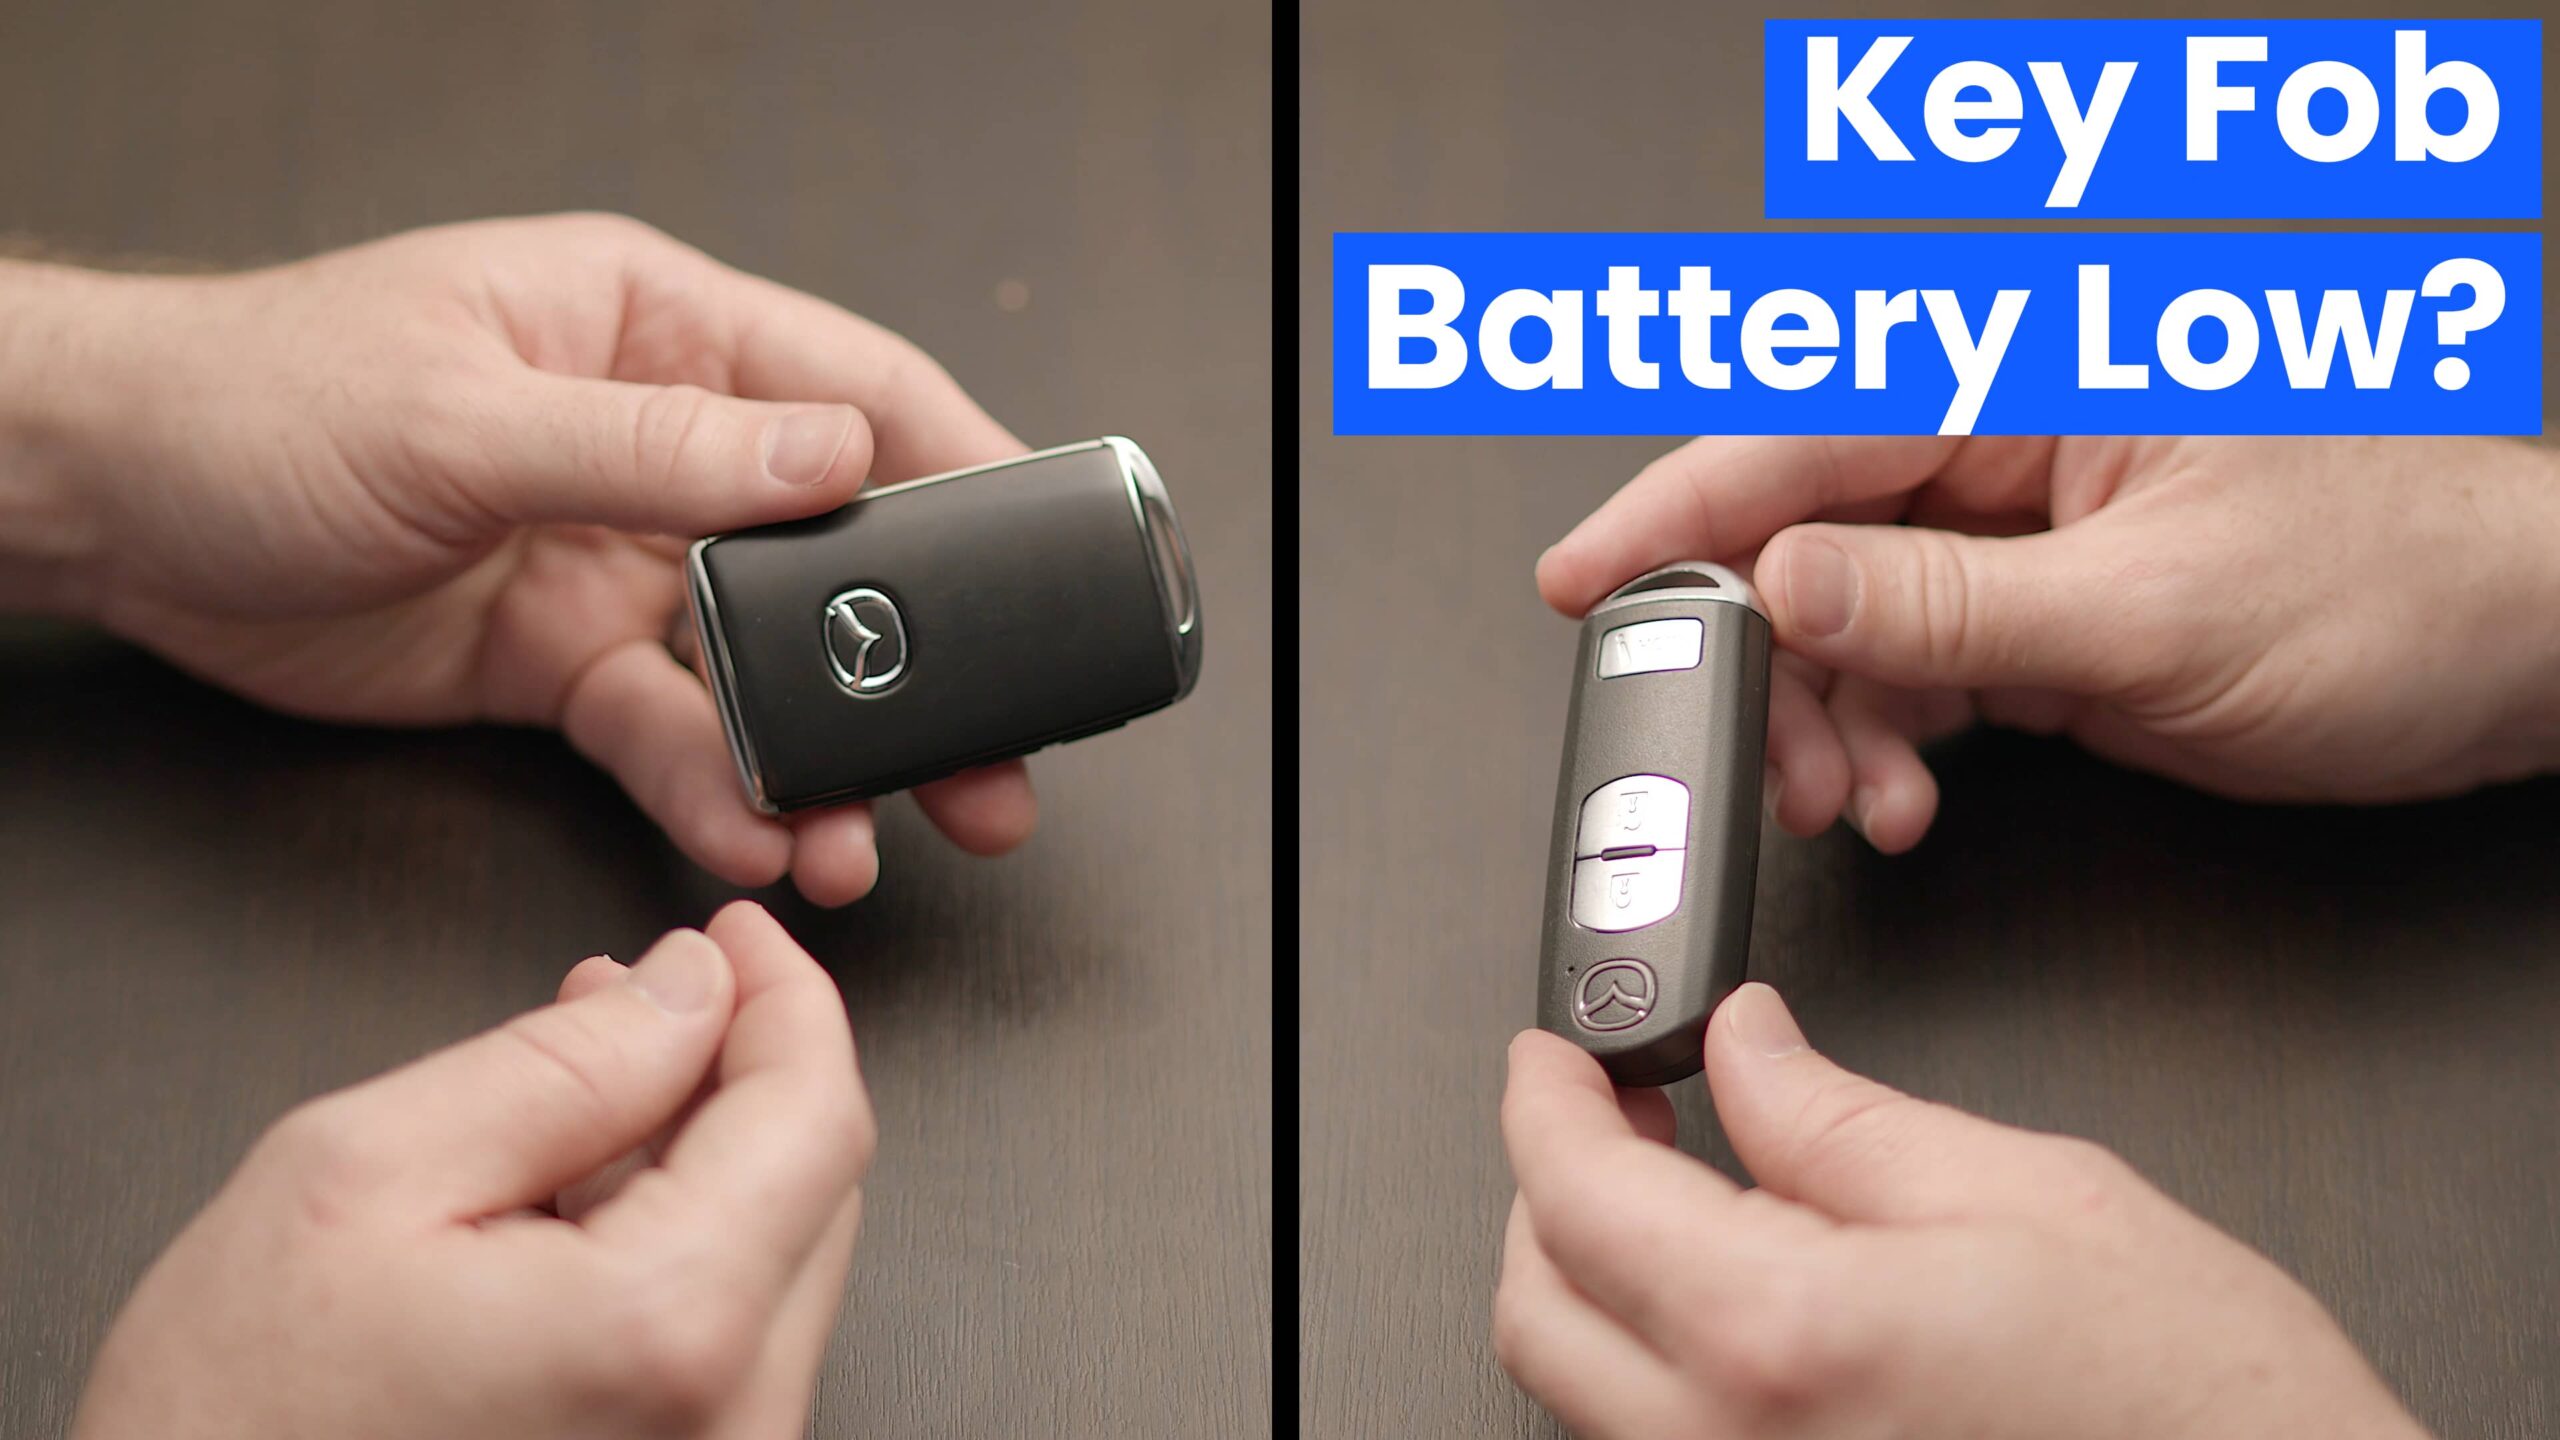 Key fob battery low